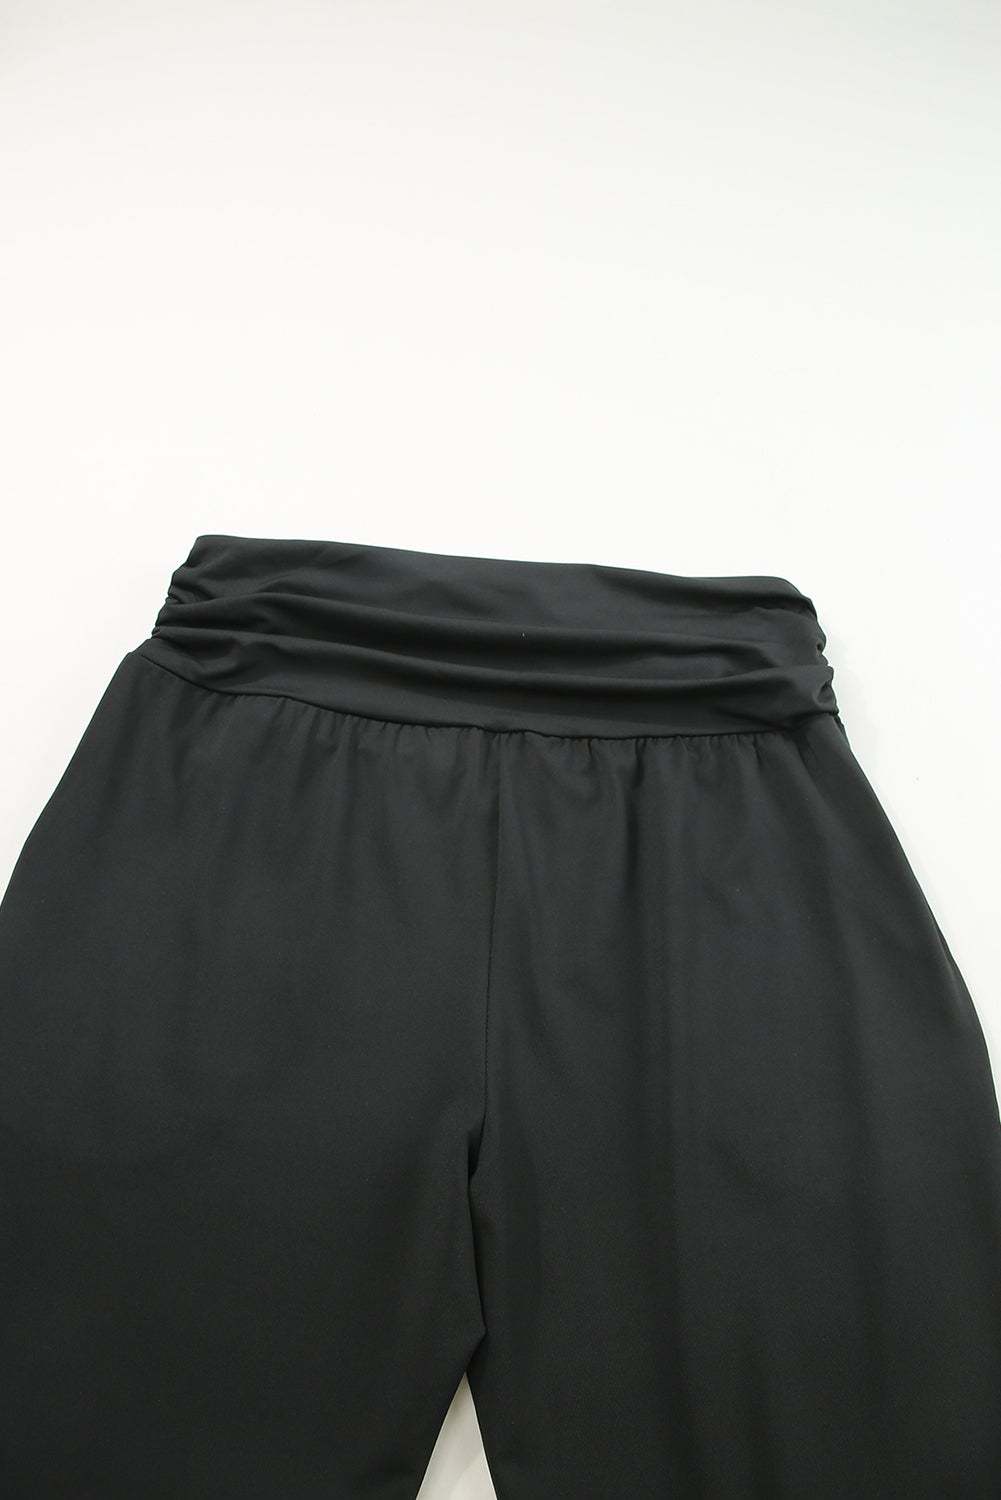 Pantalon skinny noir taille haute avec poches grande taille